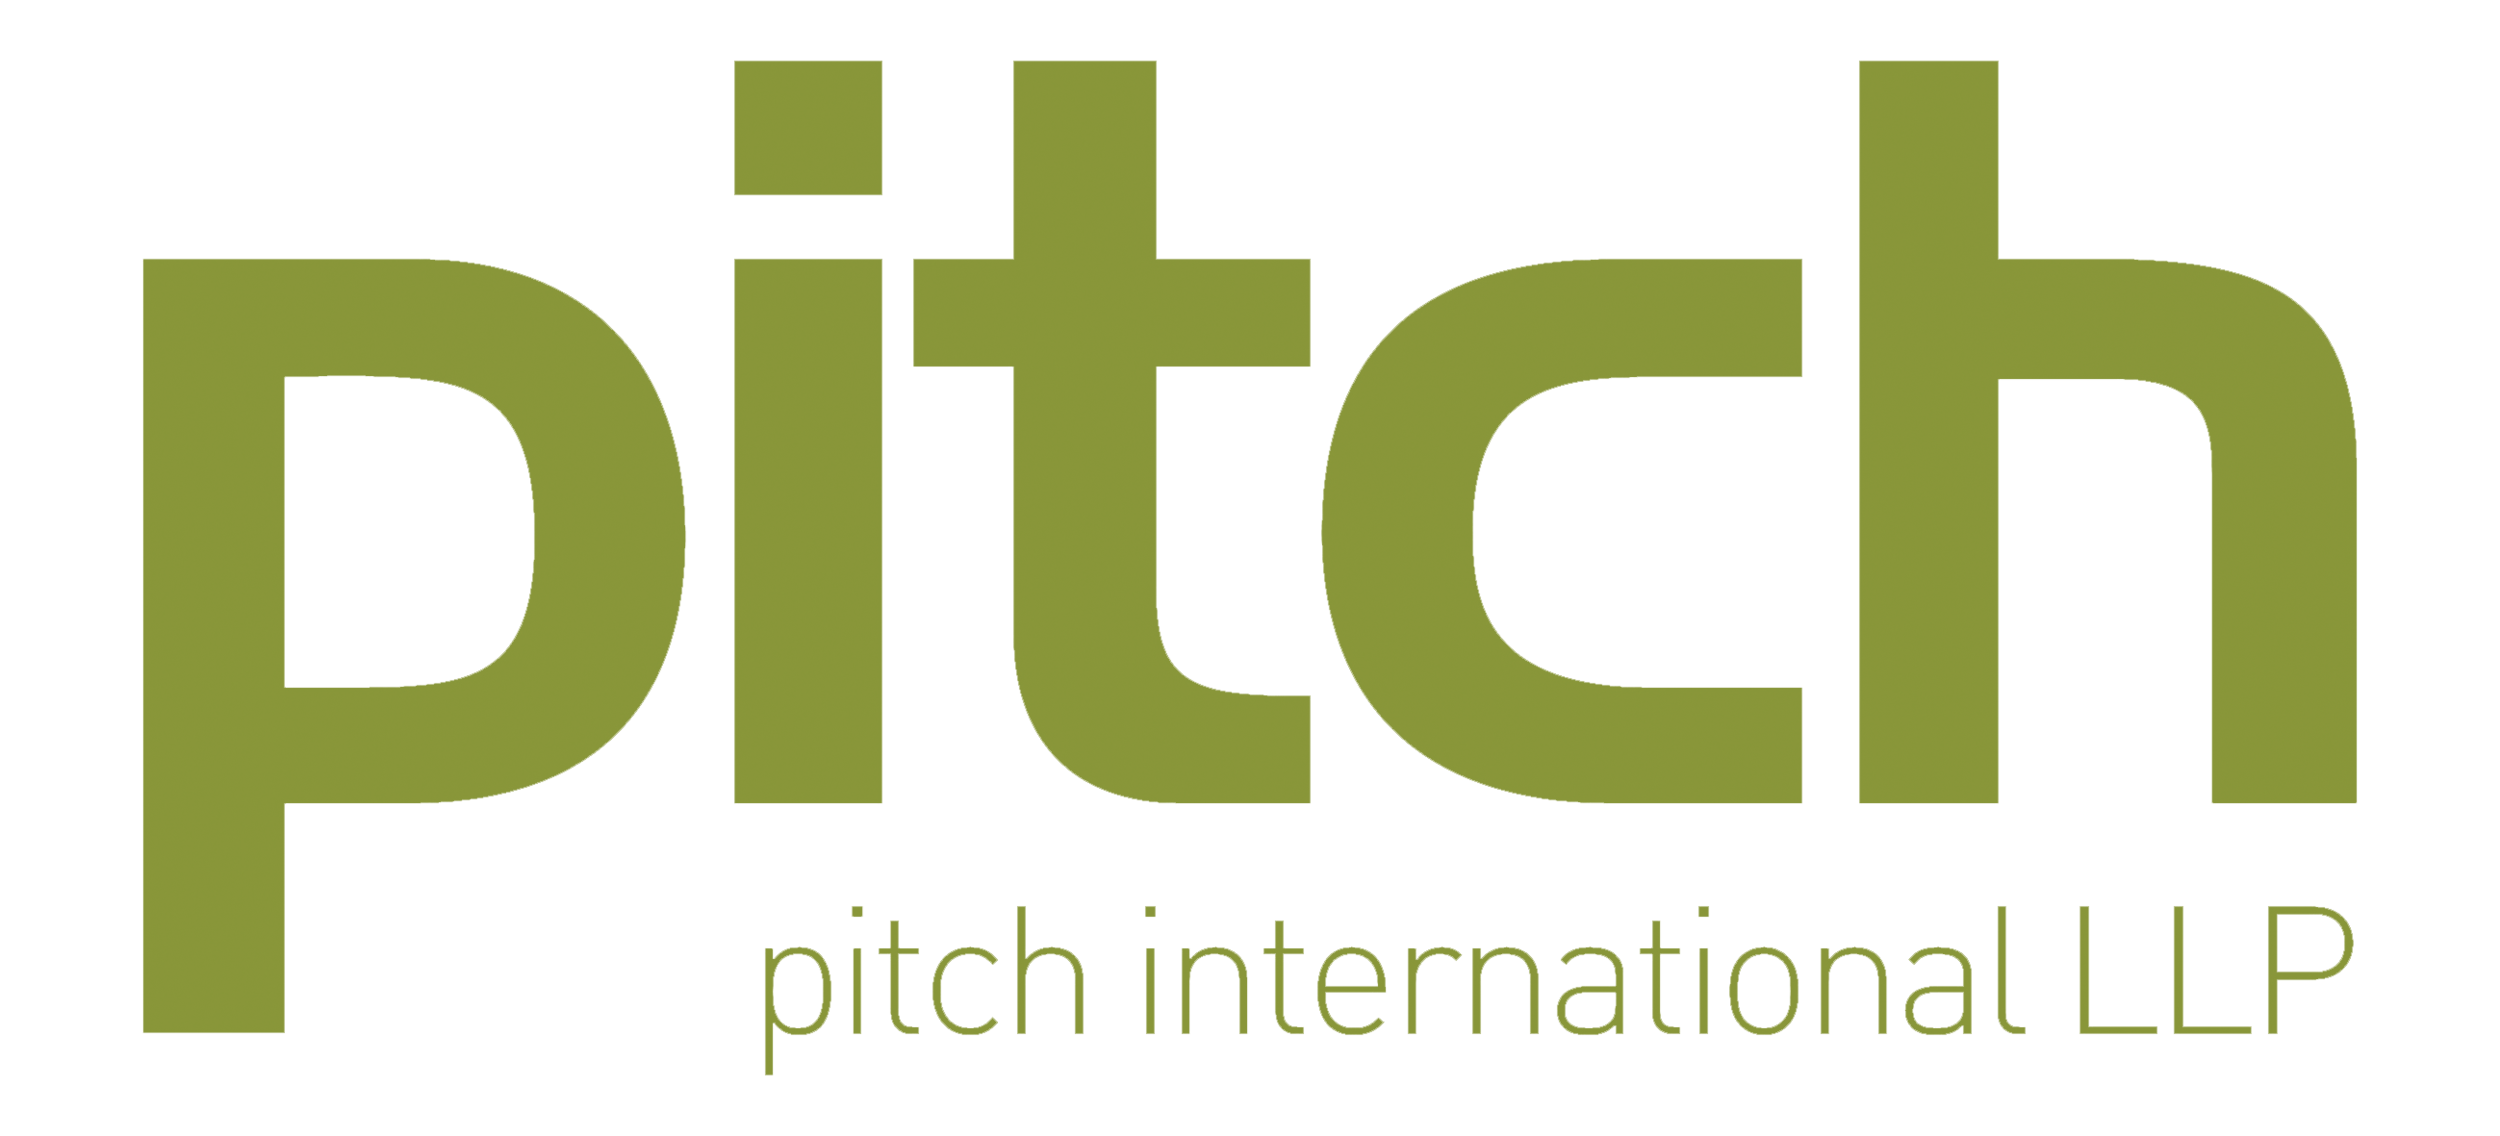 pitch-international549-1846561.png